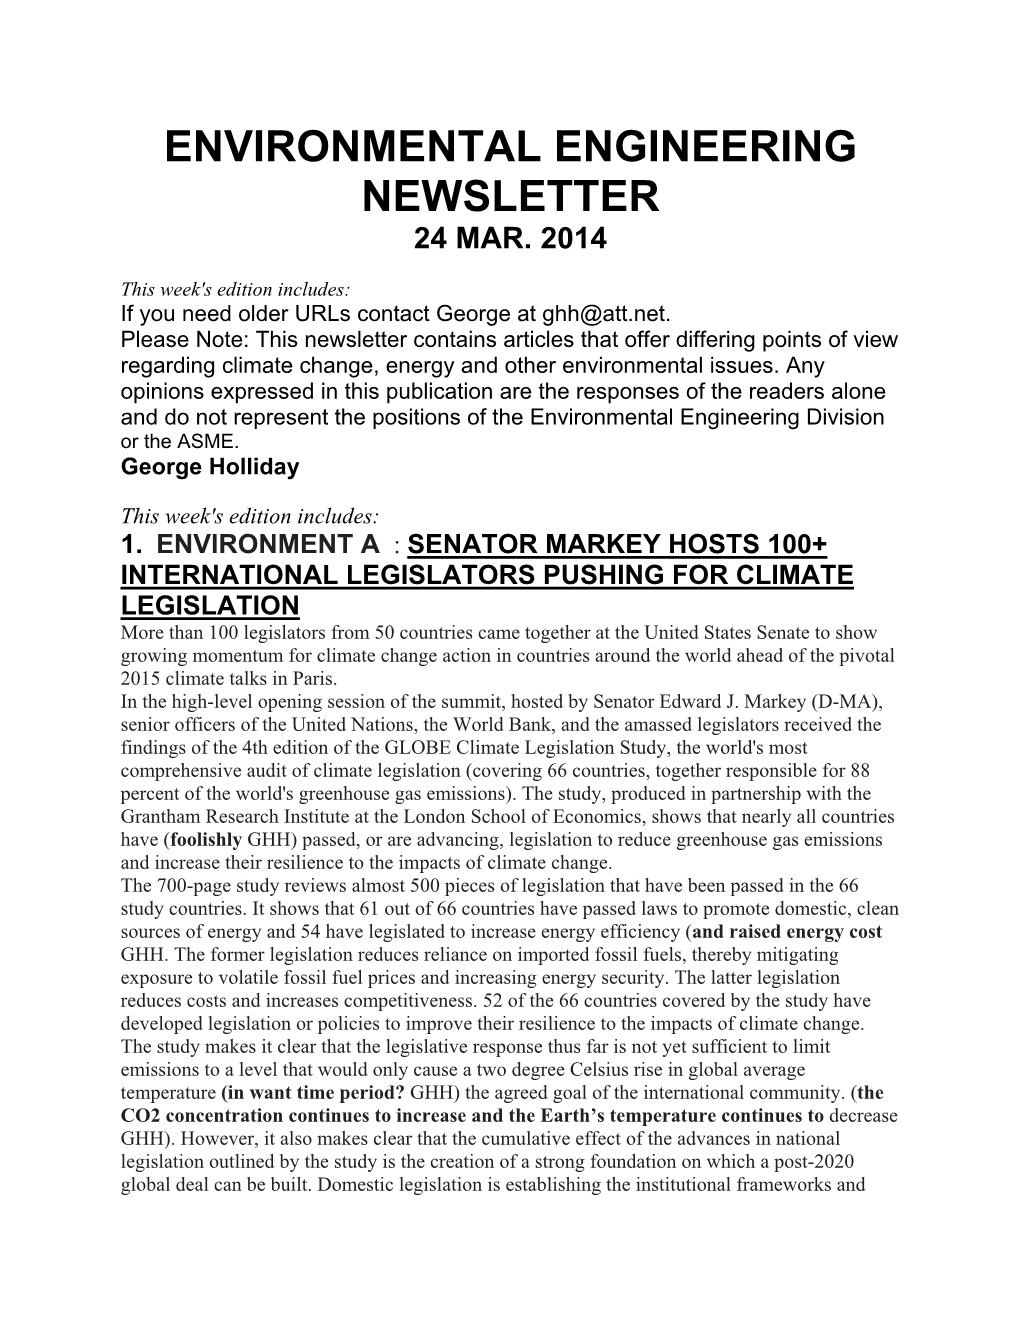 Environmental Engineering Newsletter 24 Mar